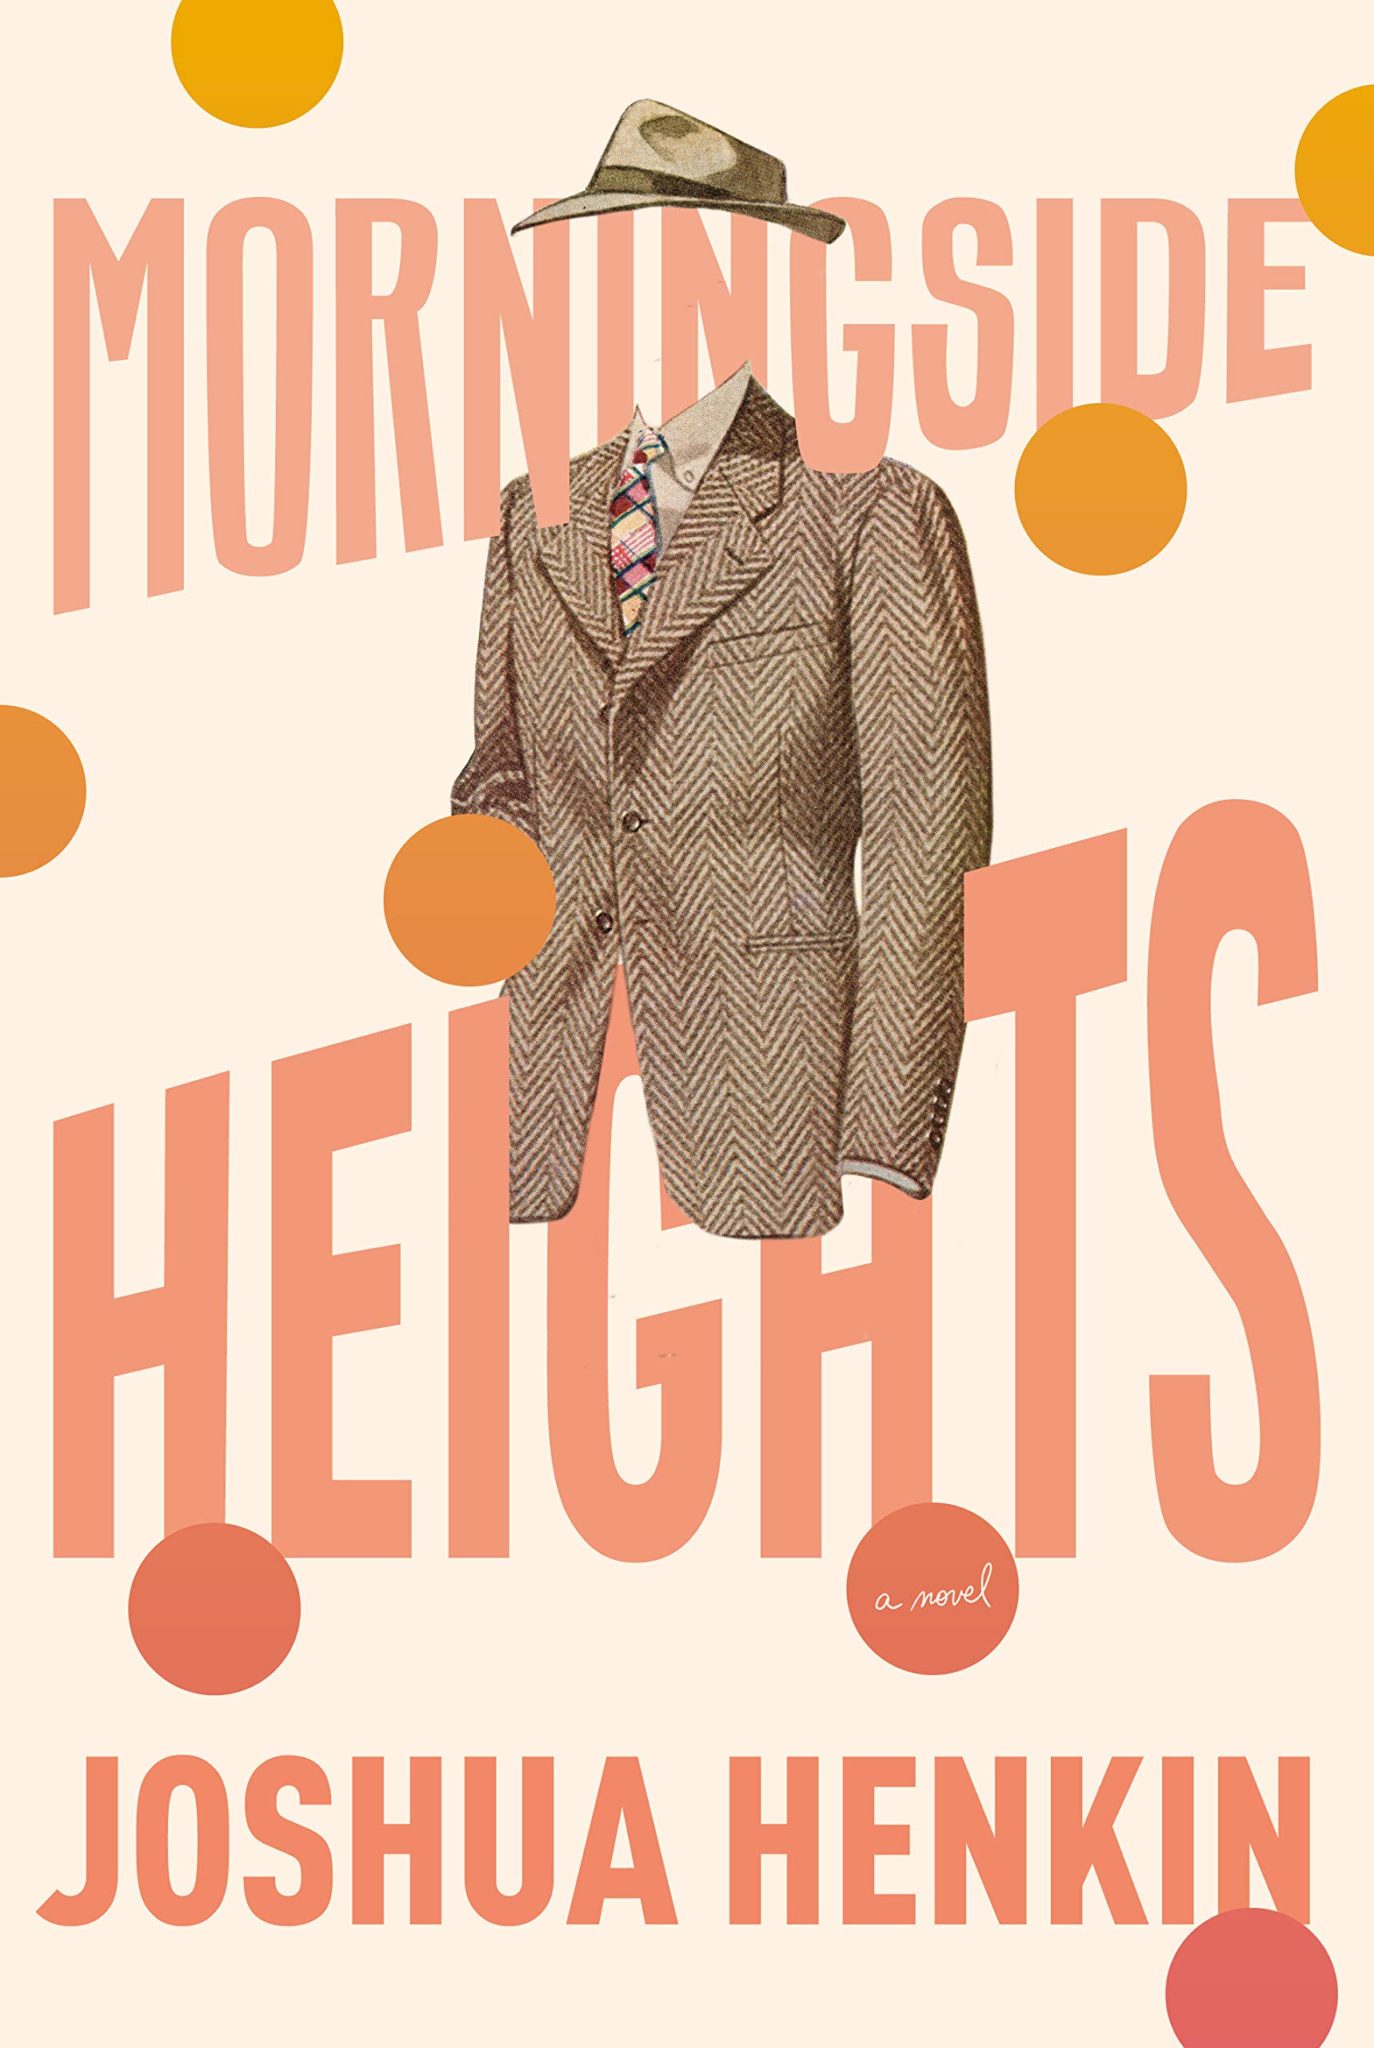 CBI Book Club – “Morningside Heights” via Zoom